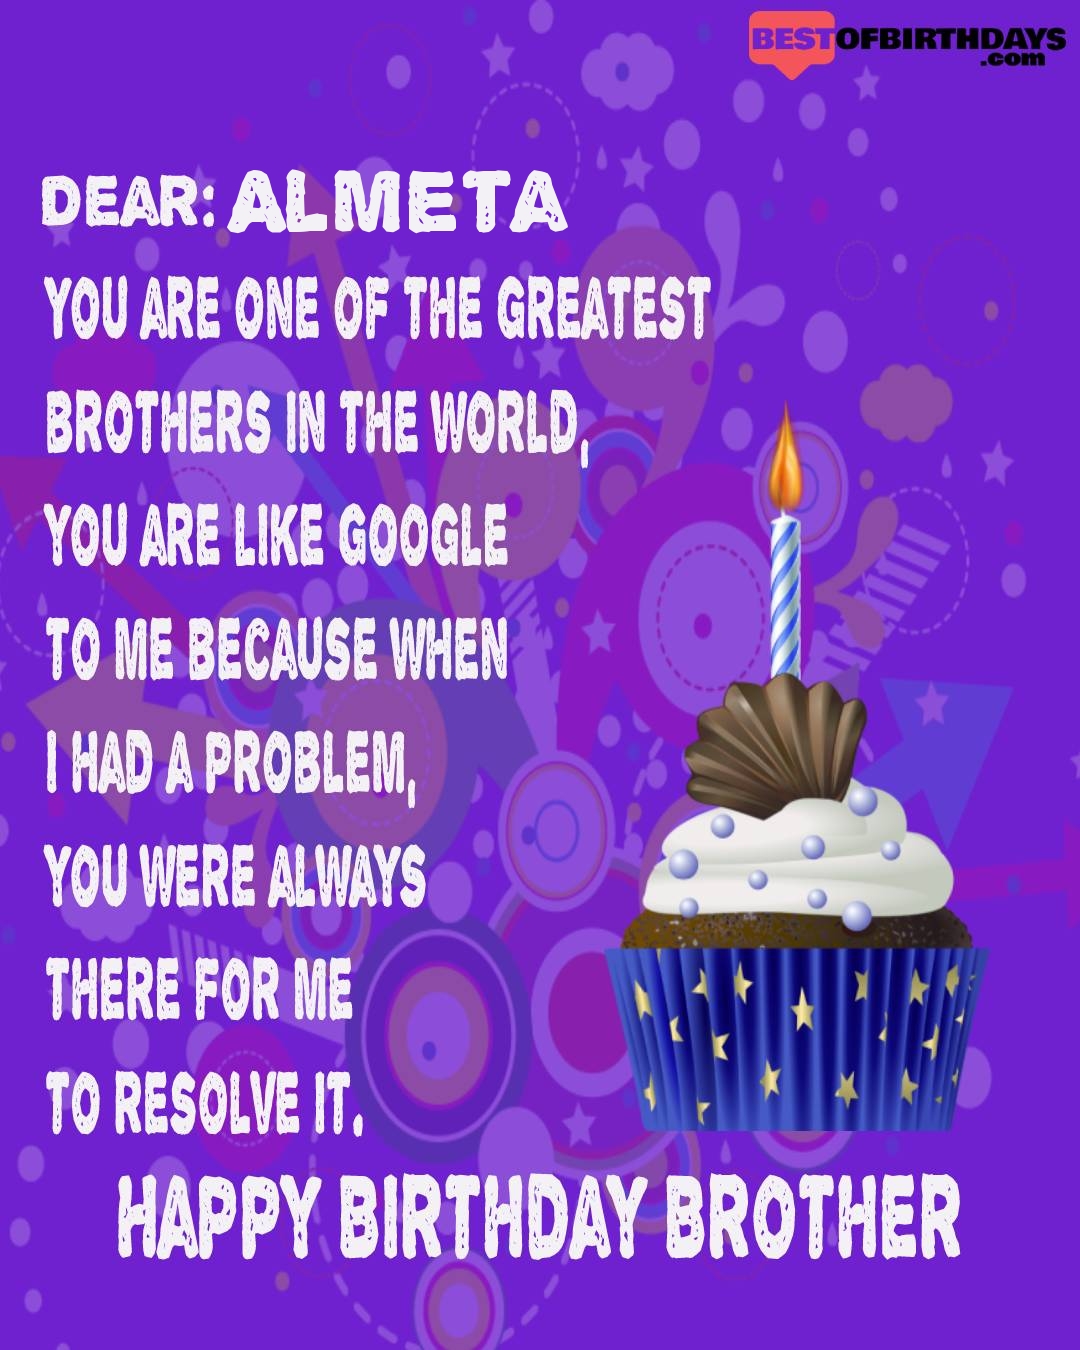 Happy birthday almeta bhai brother bro